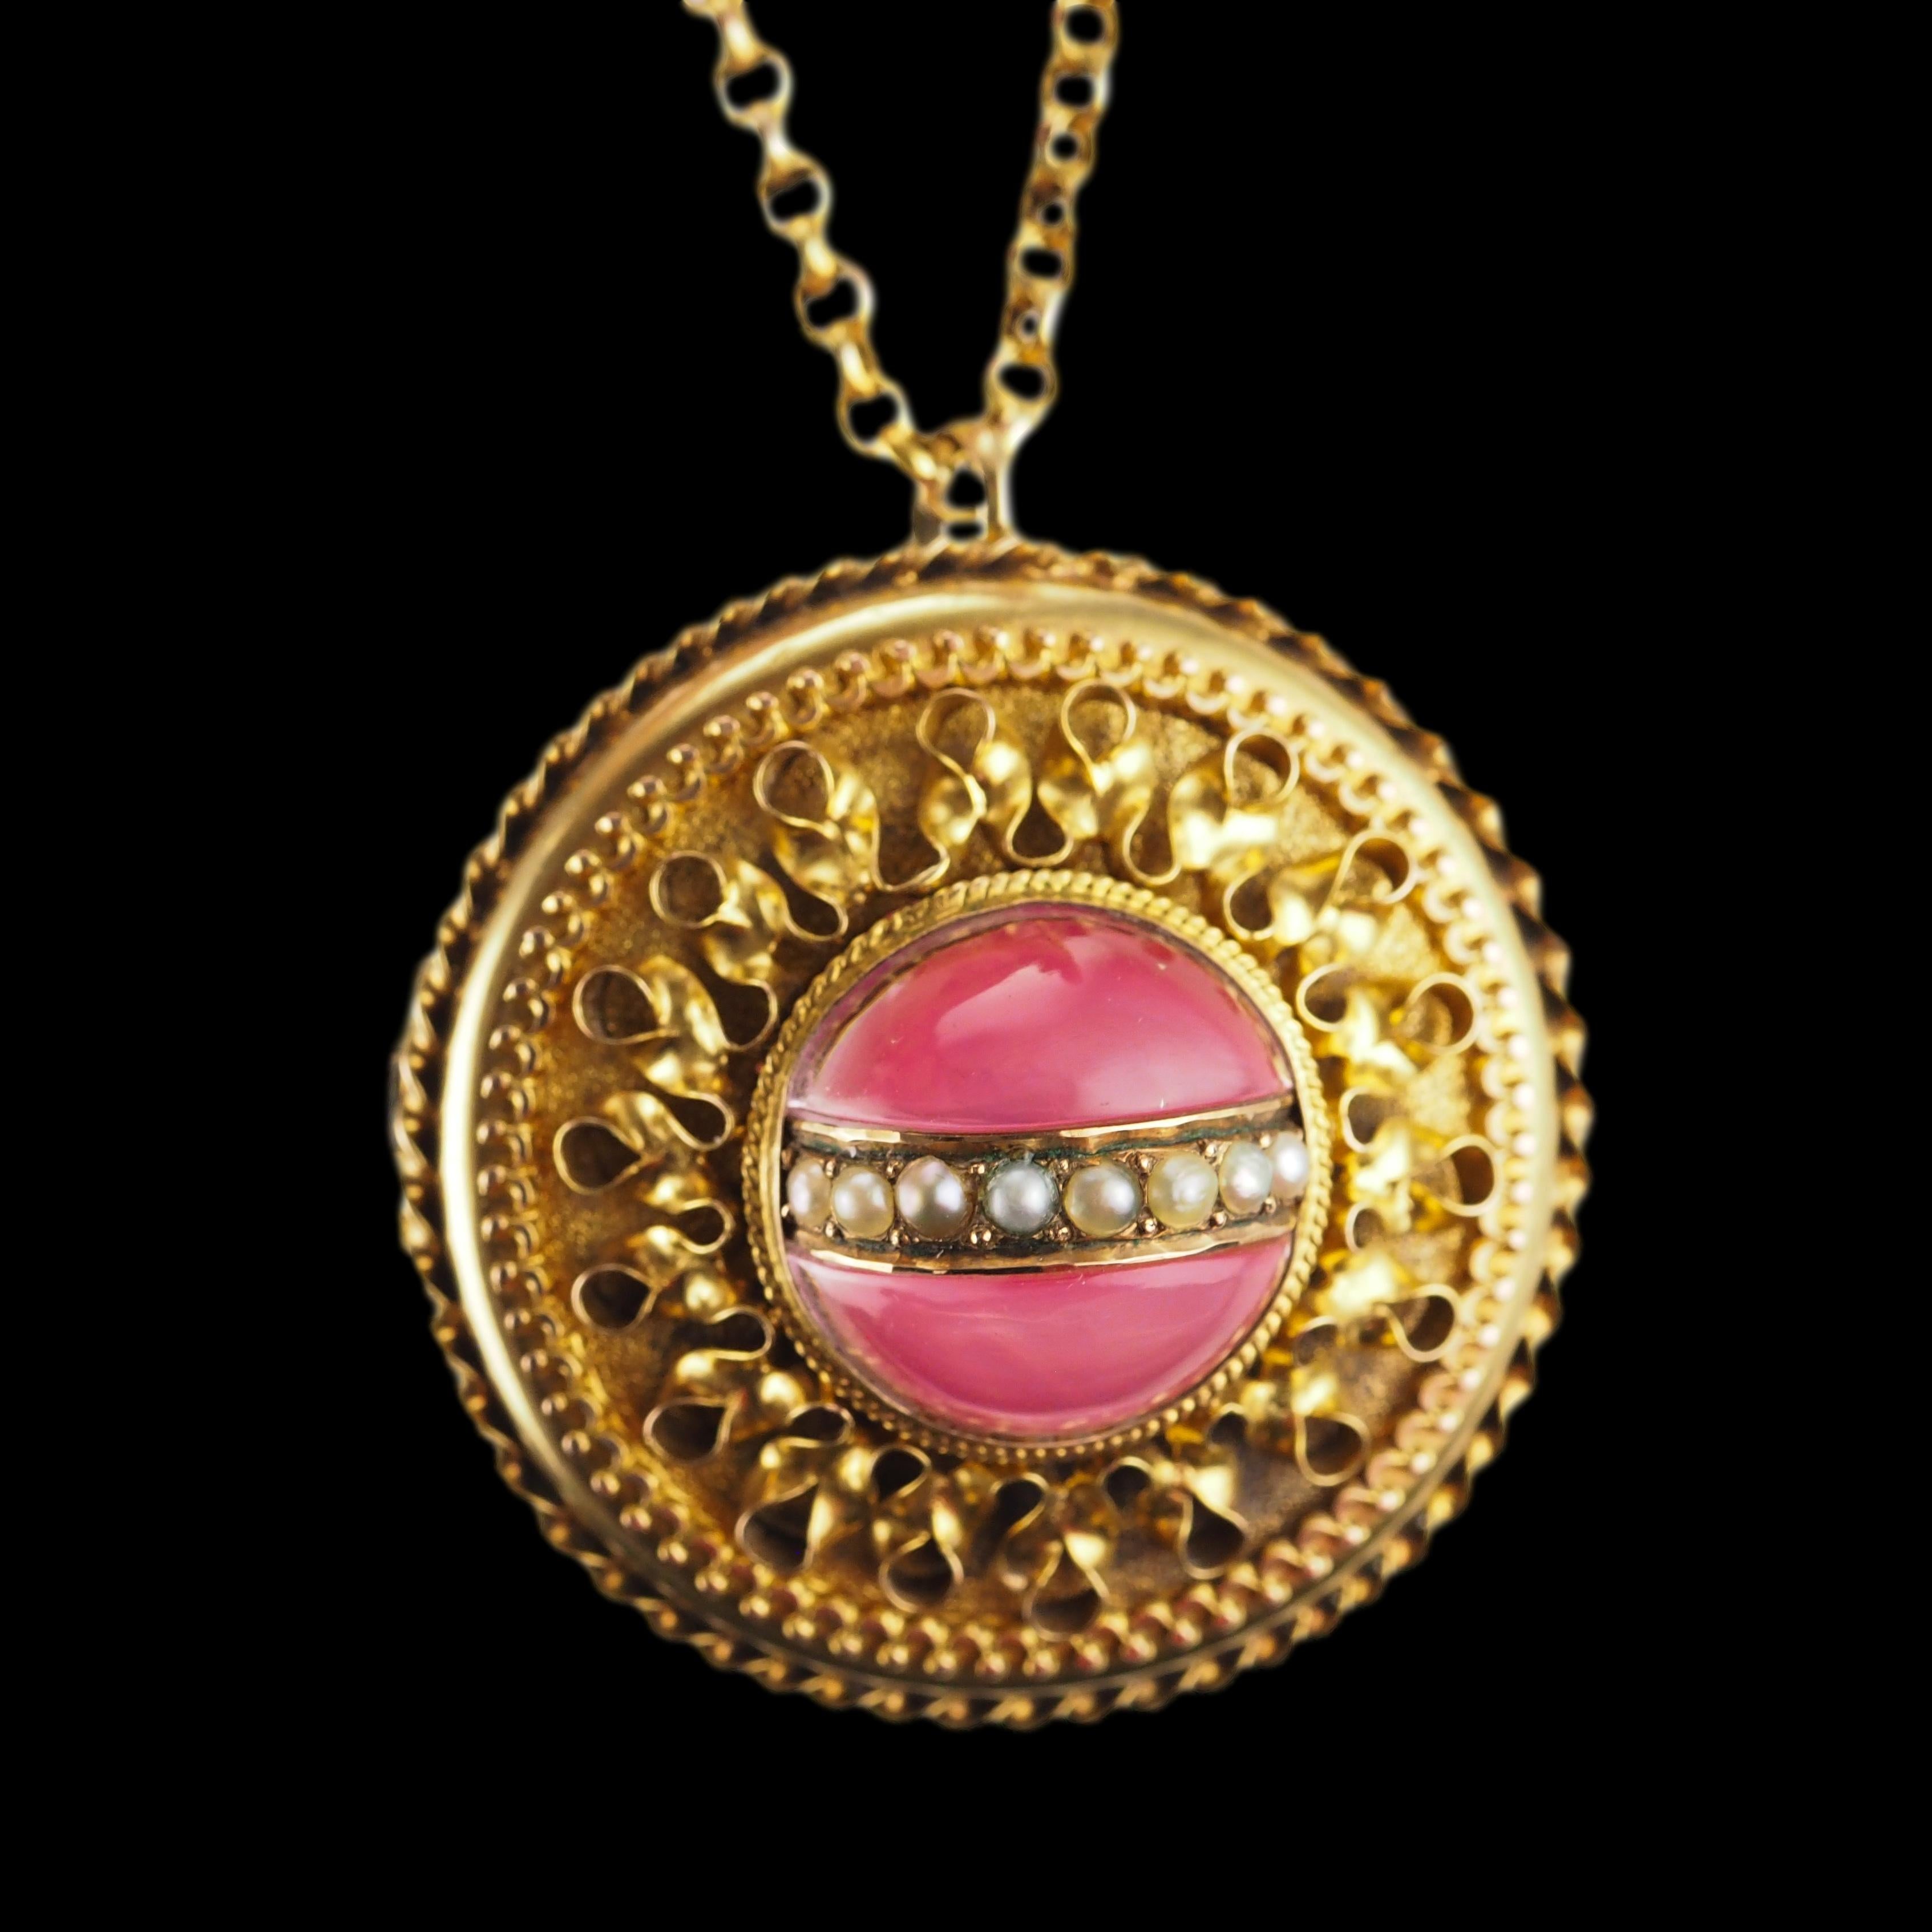 Women's or Men's Antique Victorian Etruscan Style Necklace 15K Gold Rock Crystal Pendant c.1870 For Sale